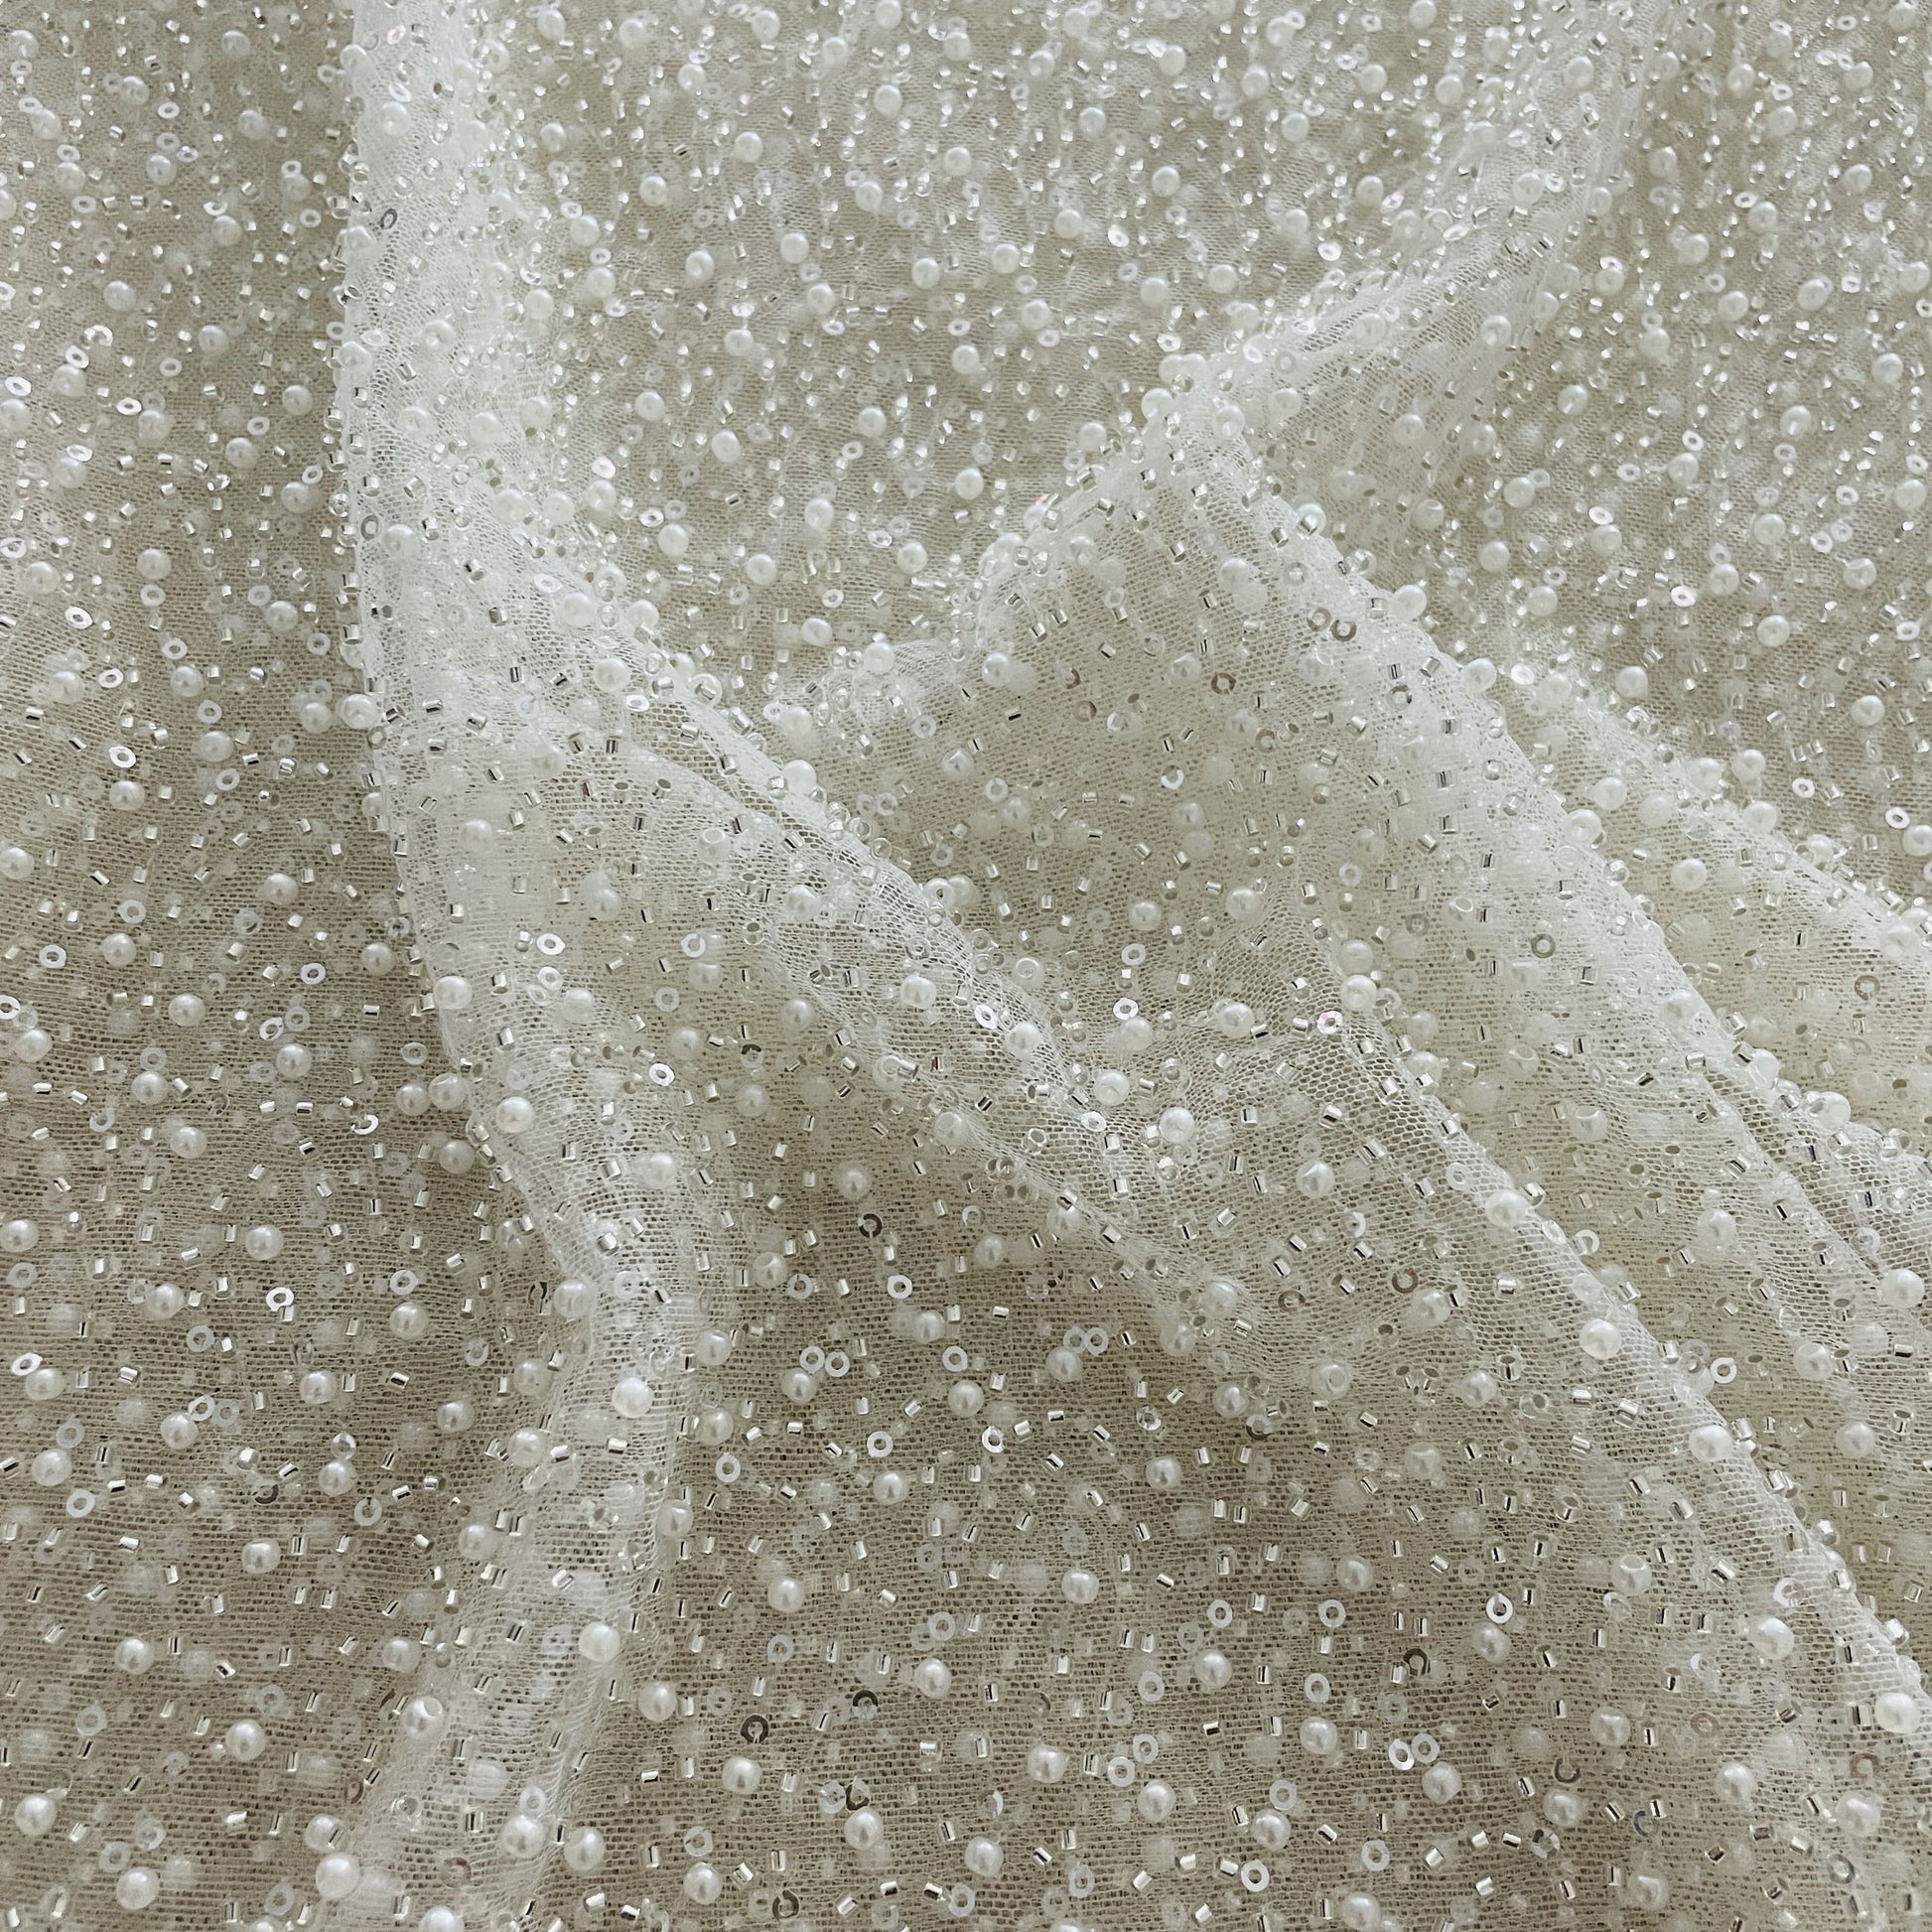 Premium White Pearl CutDana Embroidery Power Net Fabric